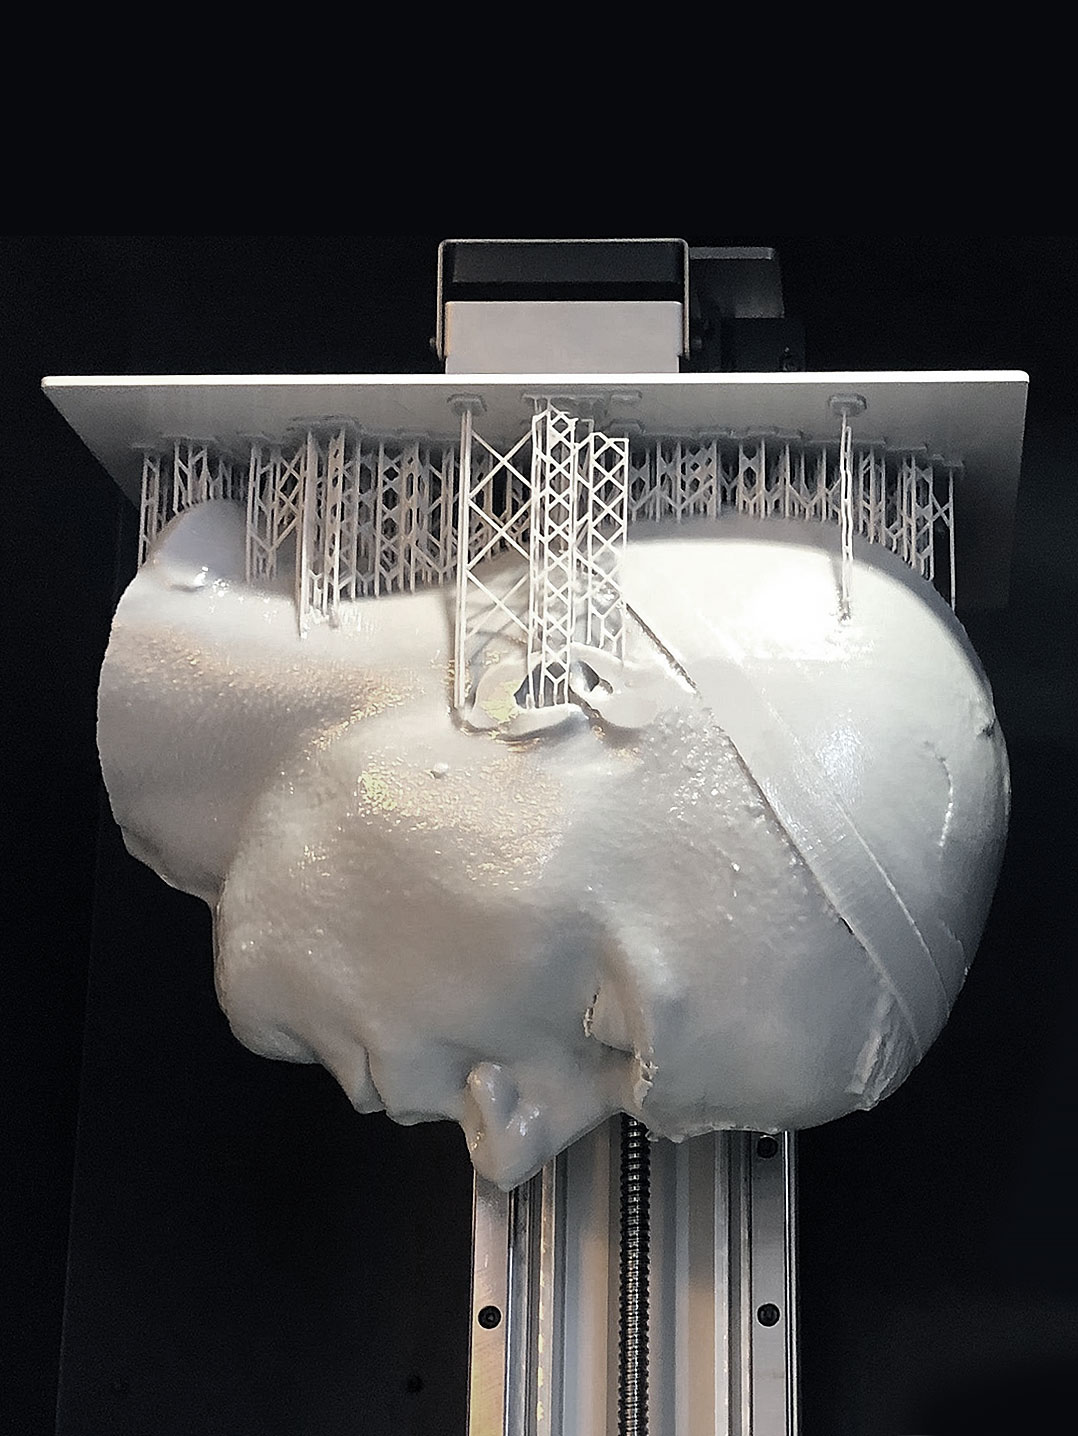 3D printing custom-made facial props for SNL hosts